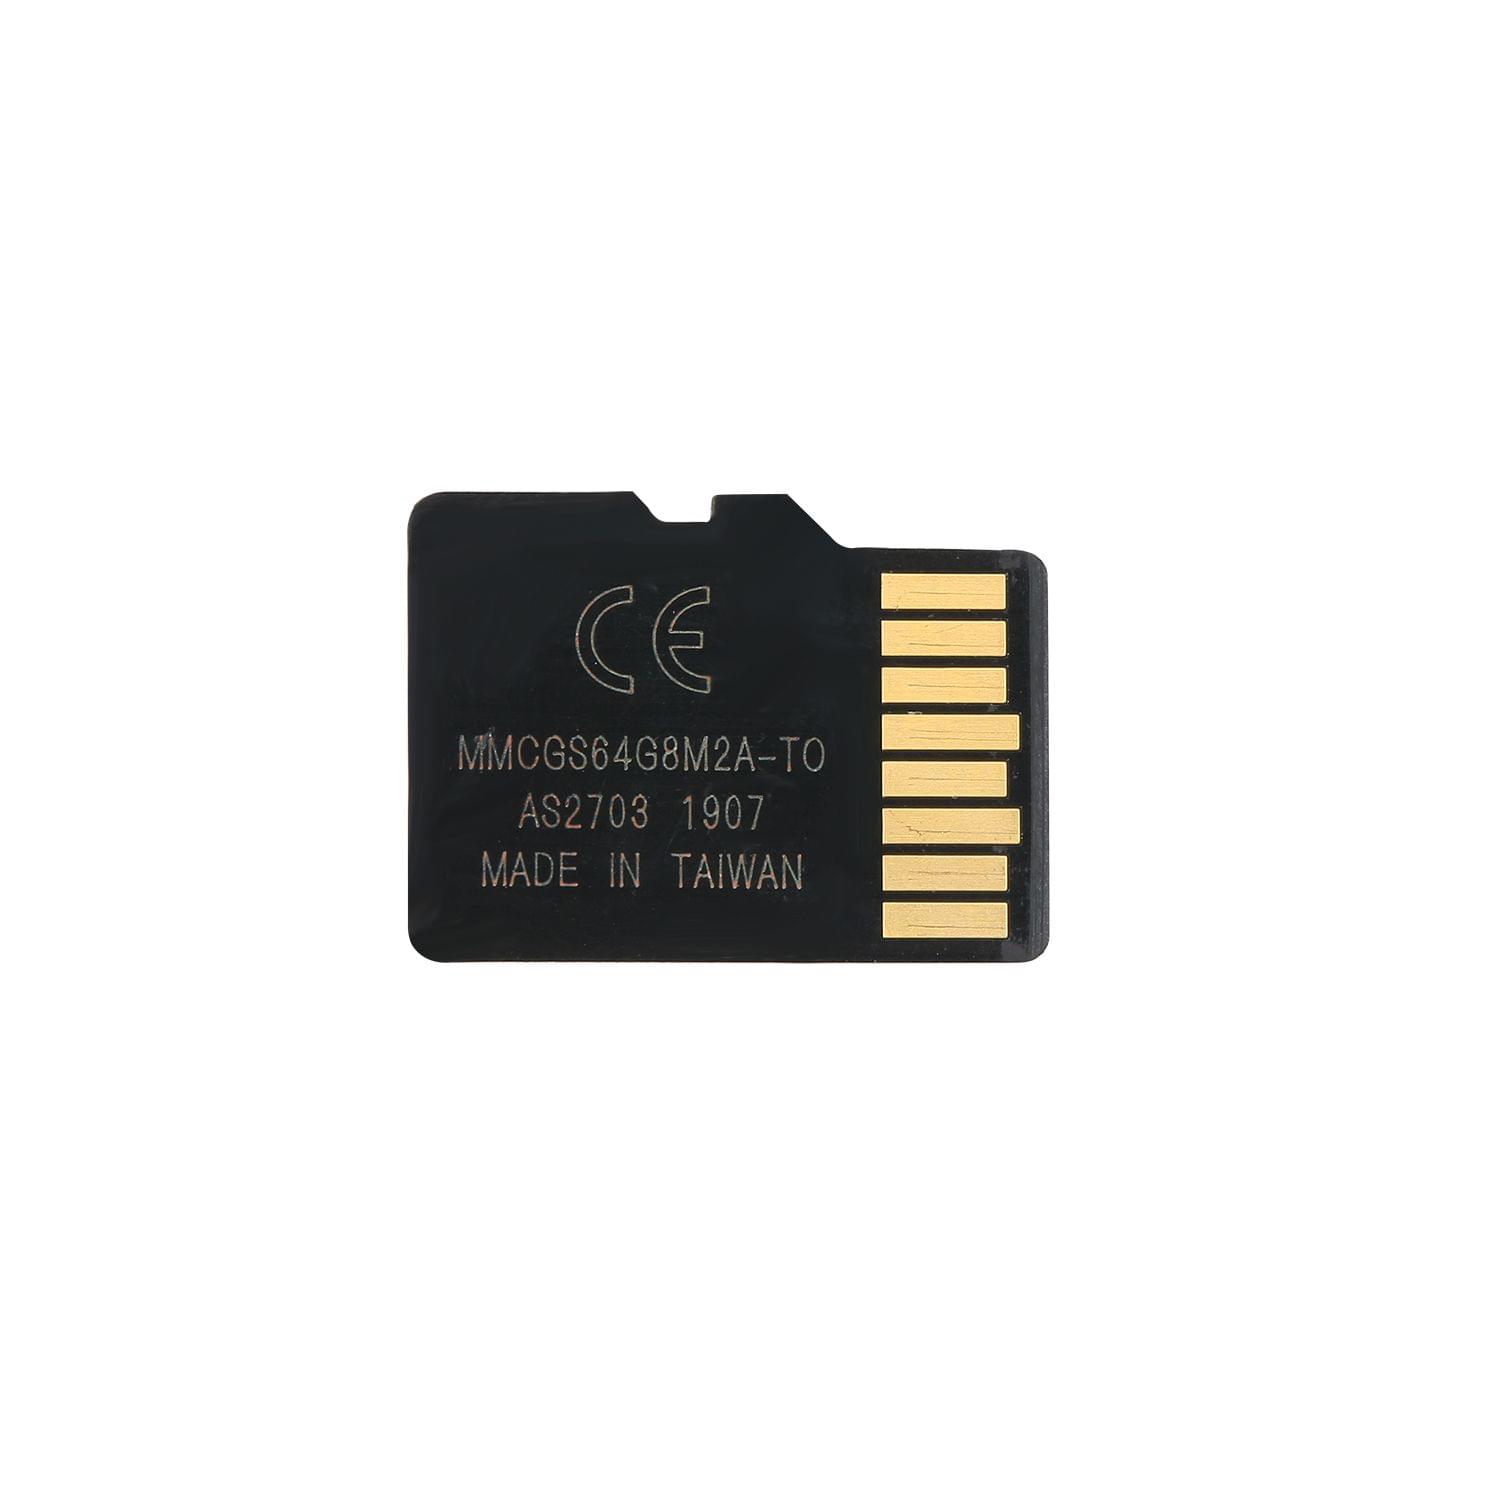 16G TF Card Memory Card for PC Digital Camera Monitor - 16G